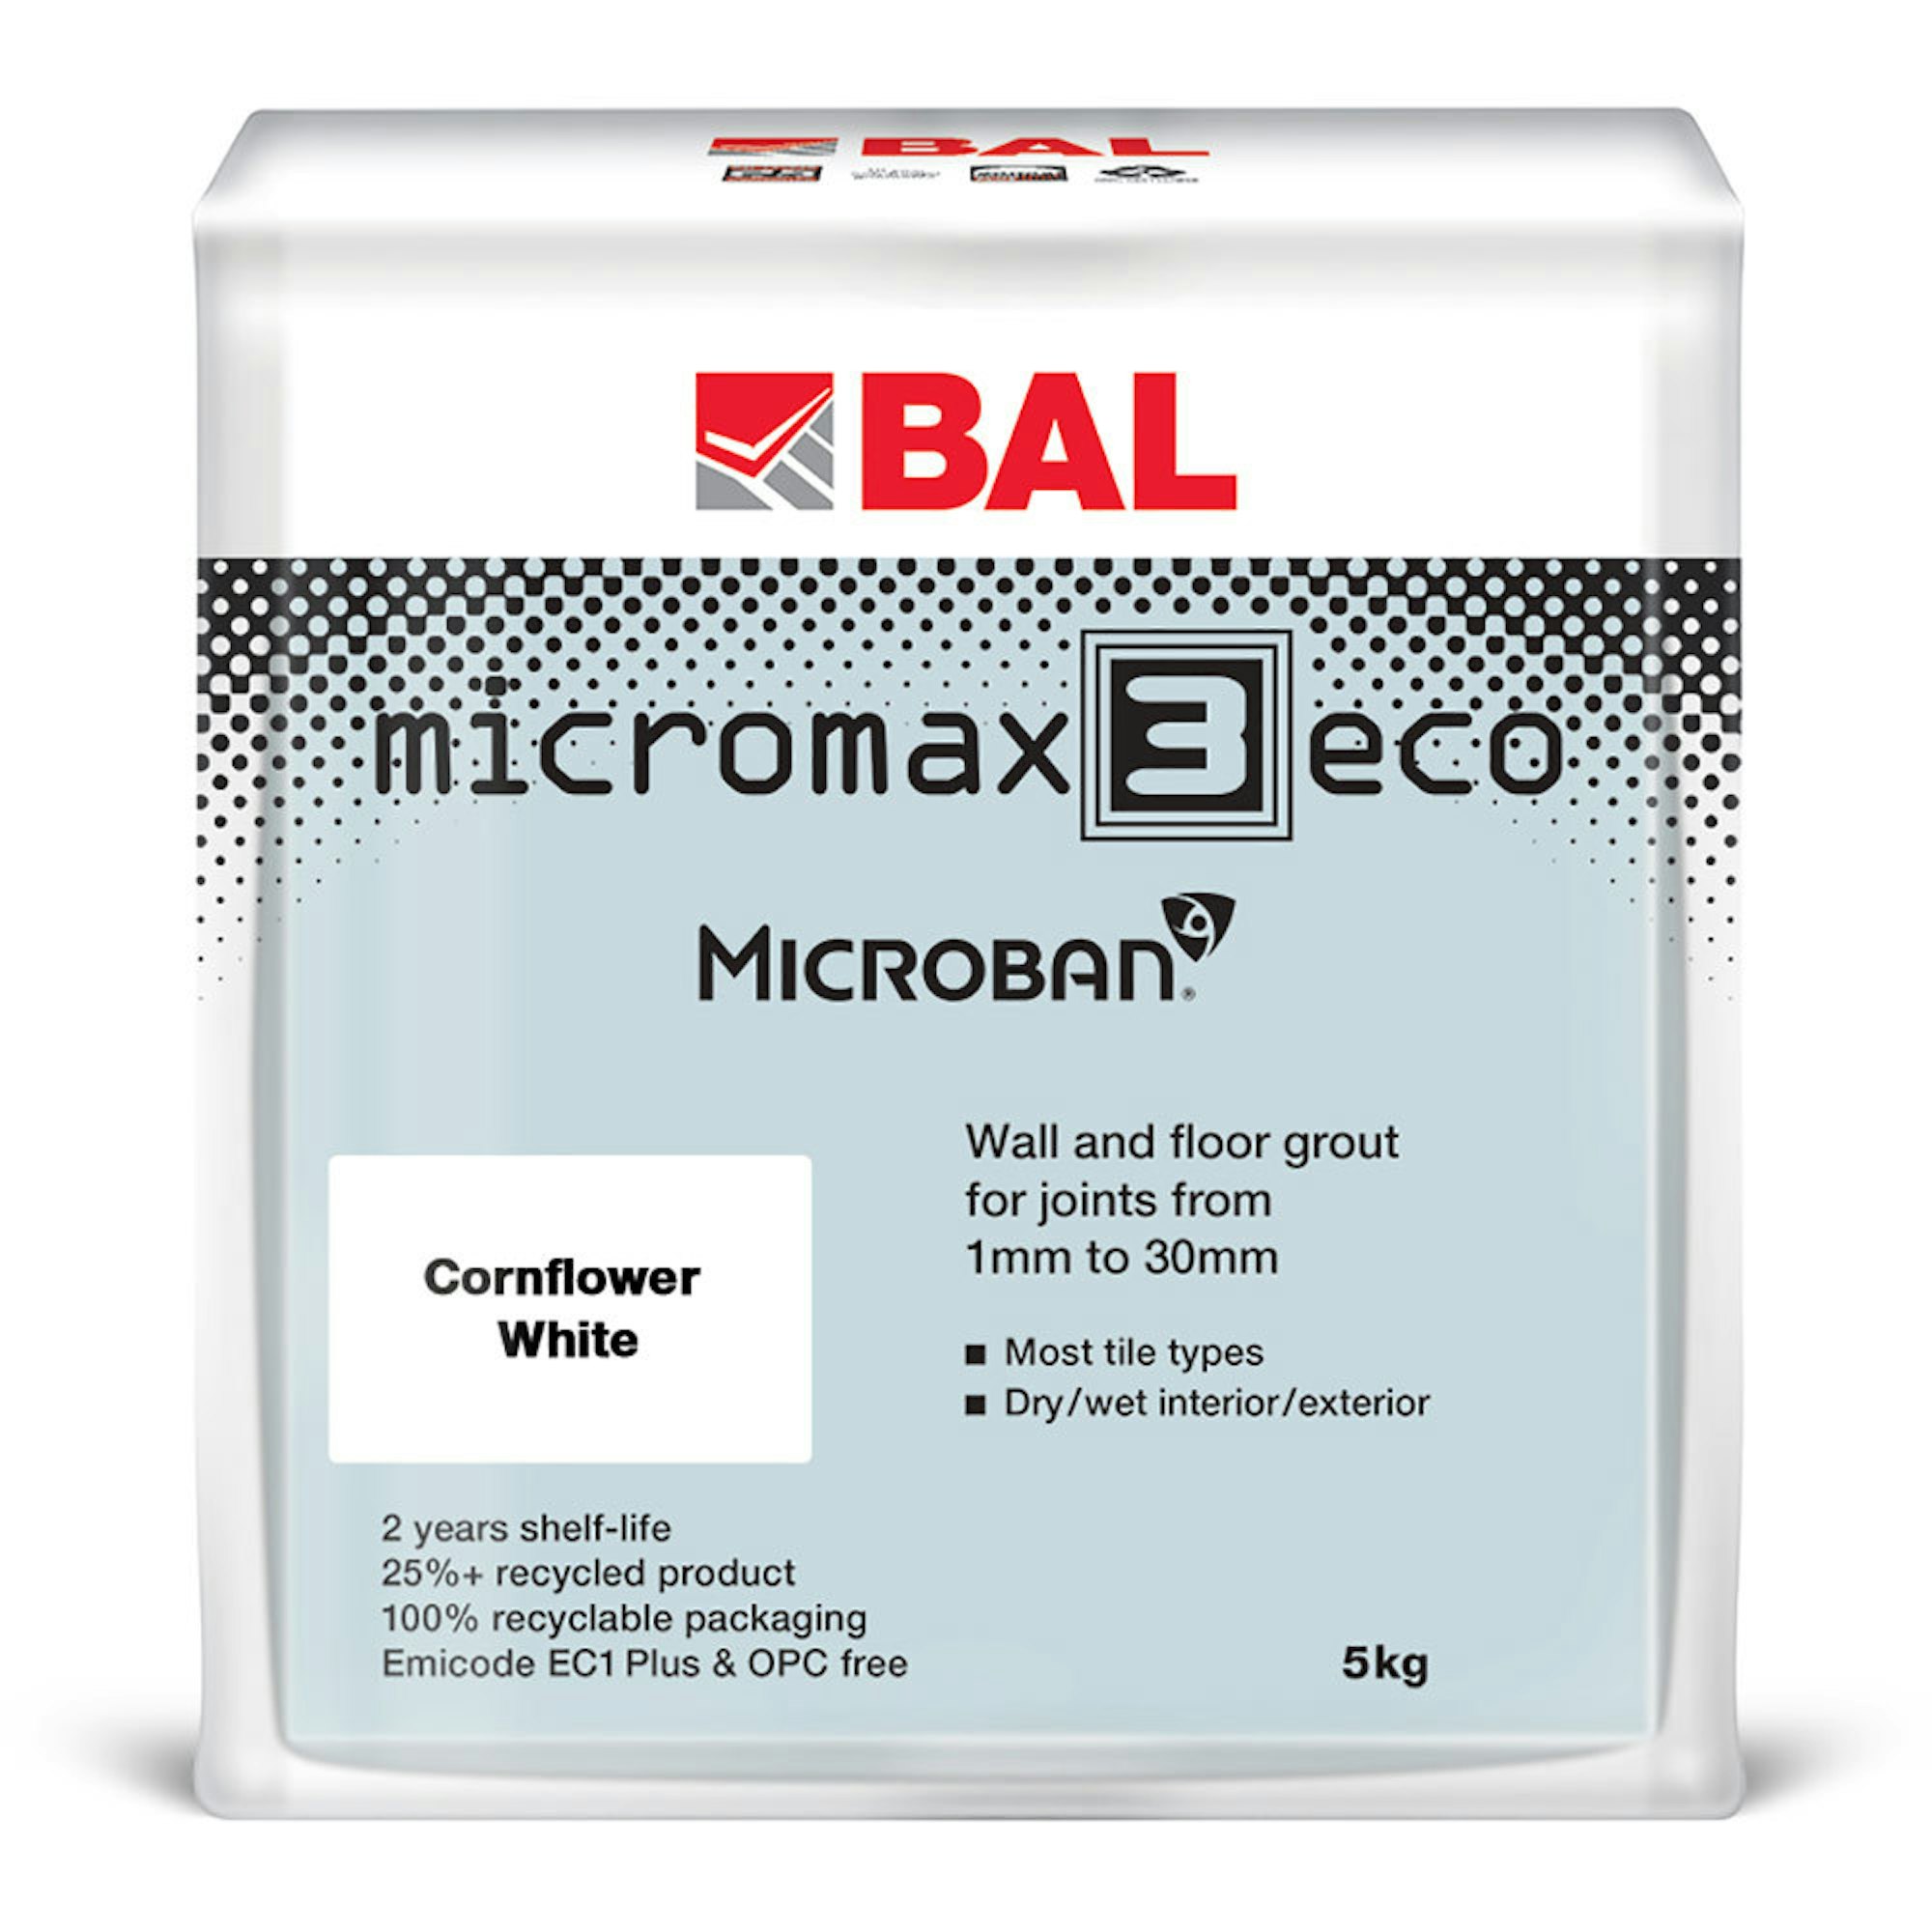 5kg BAL Micromax 3 Eco Cornflower White Grout